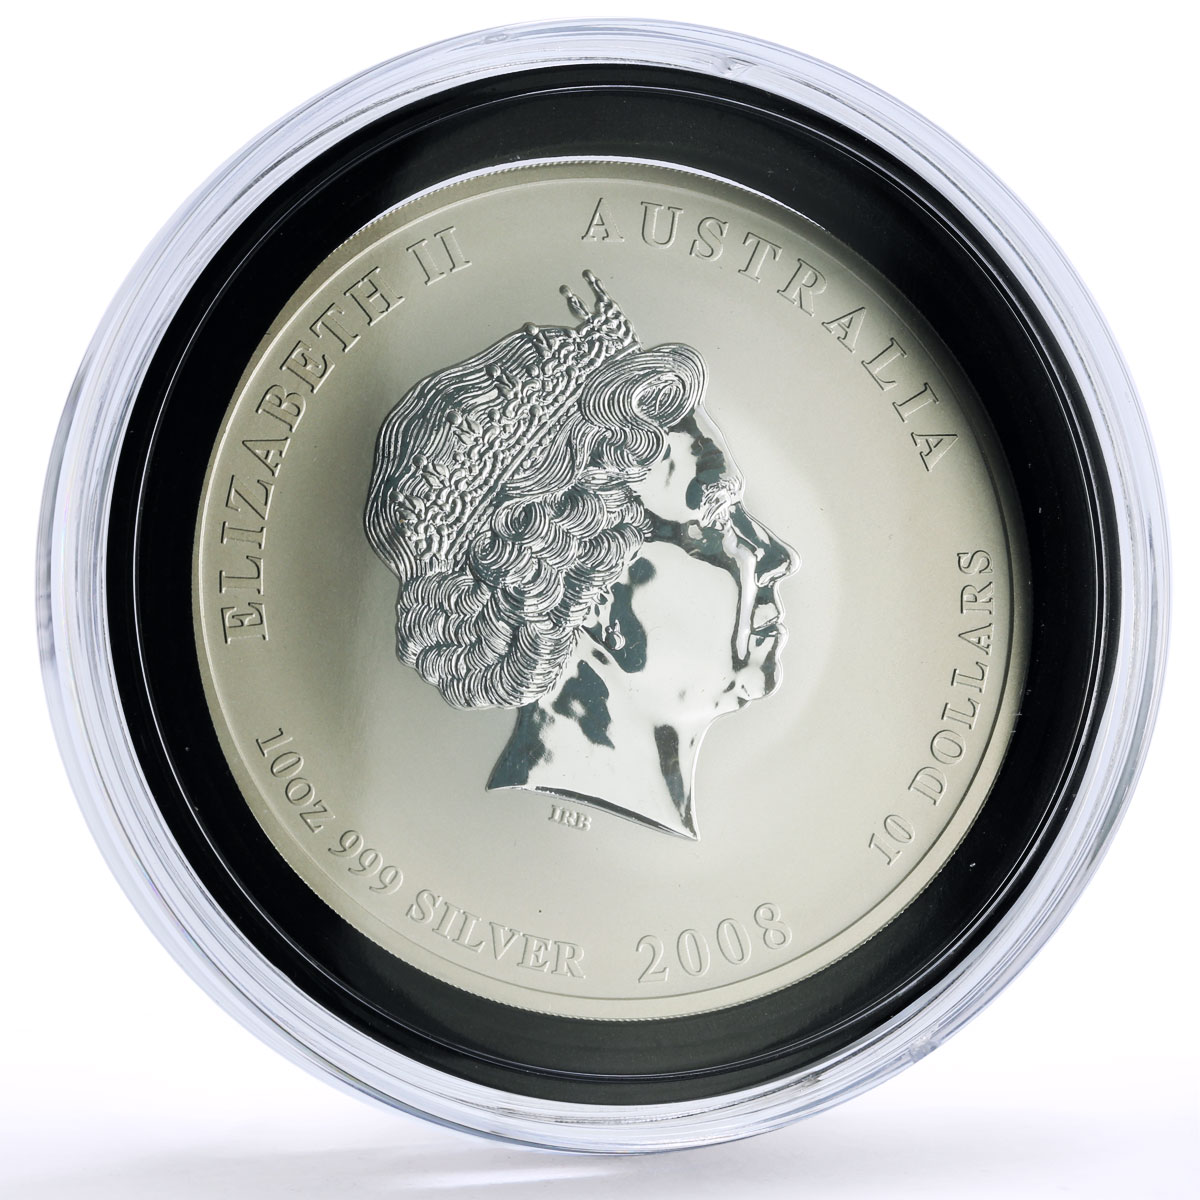 Australia 10 dollars Lunar Calendar II Year of the Mouse 10 OZ silver coin 2008